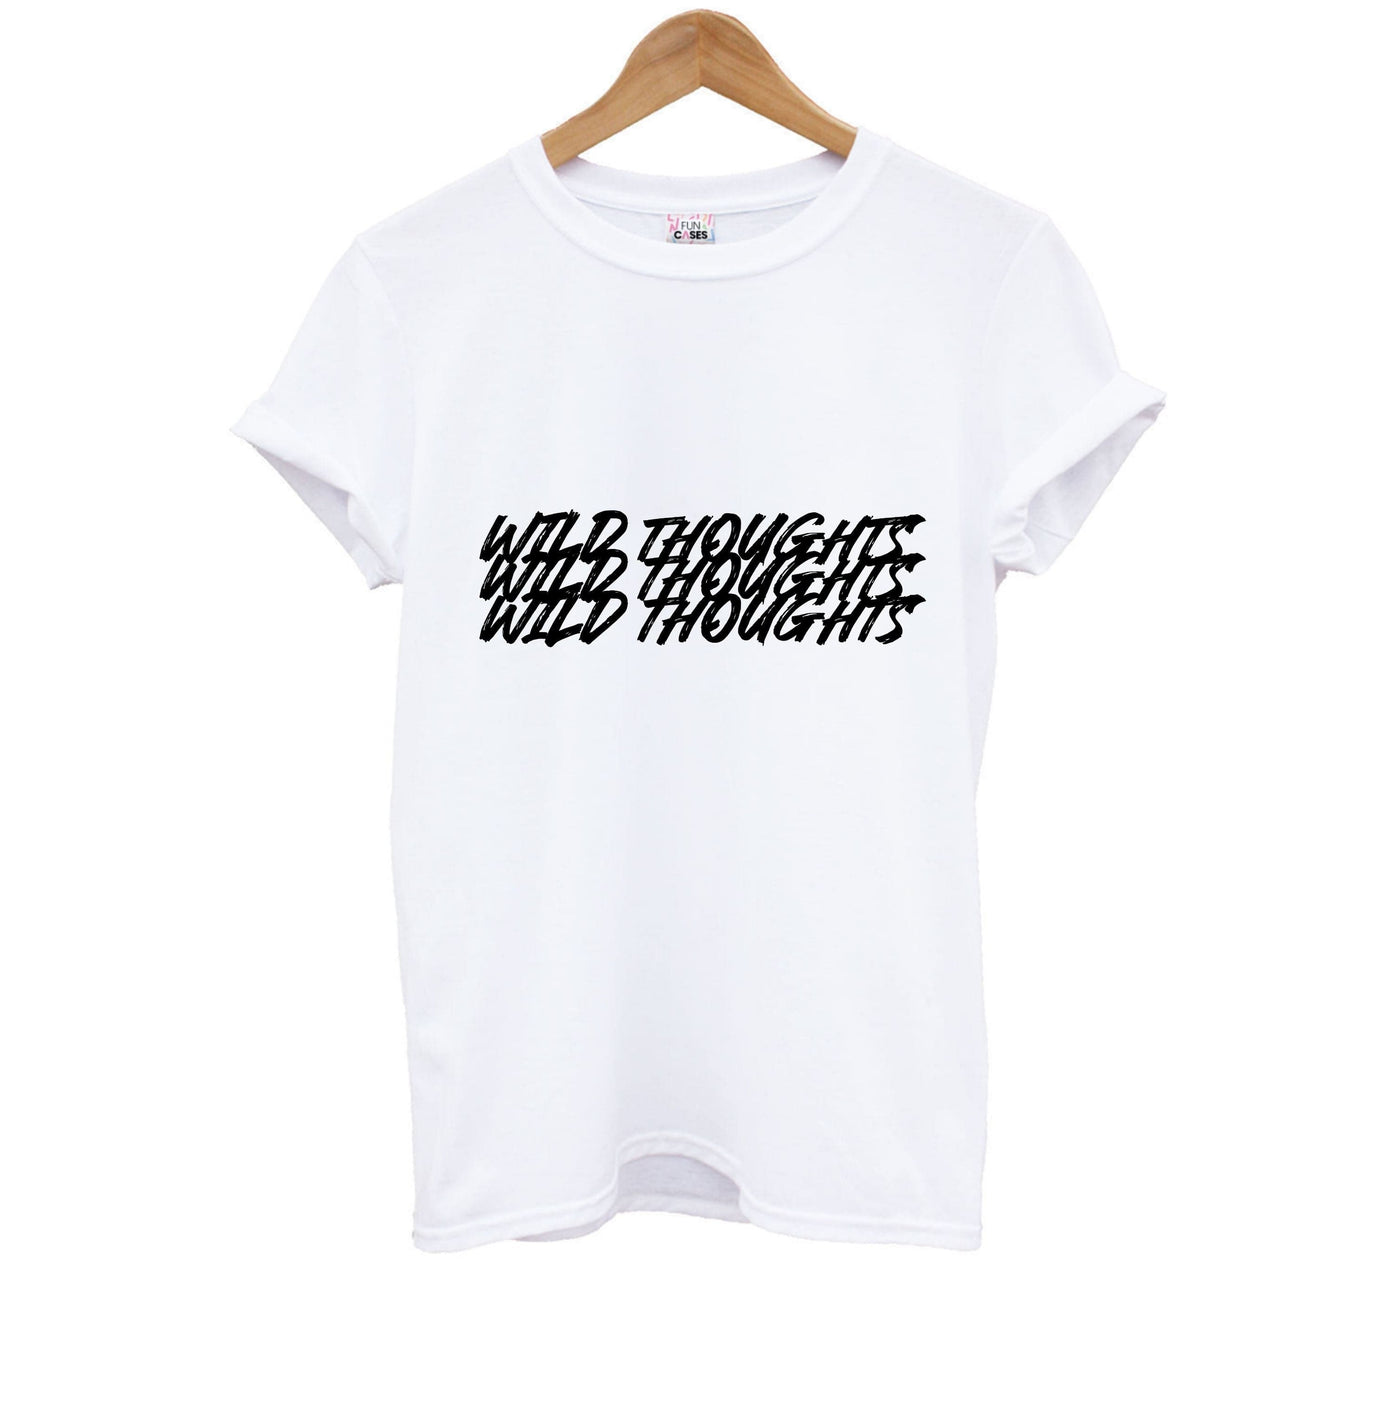 Wild Thoughts - Rihanna Kids T-Shirt